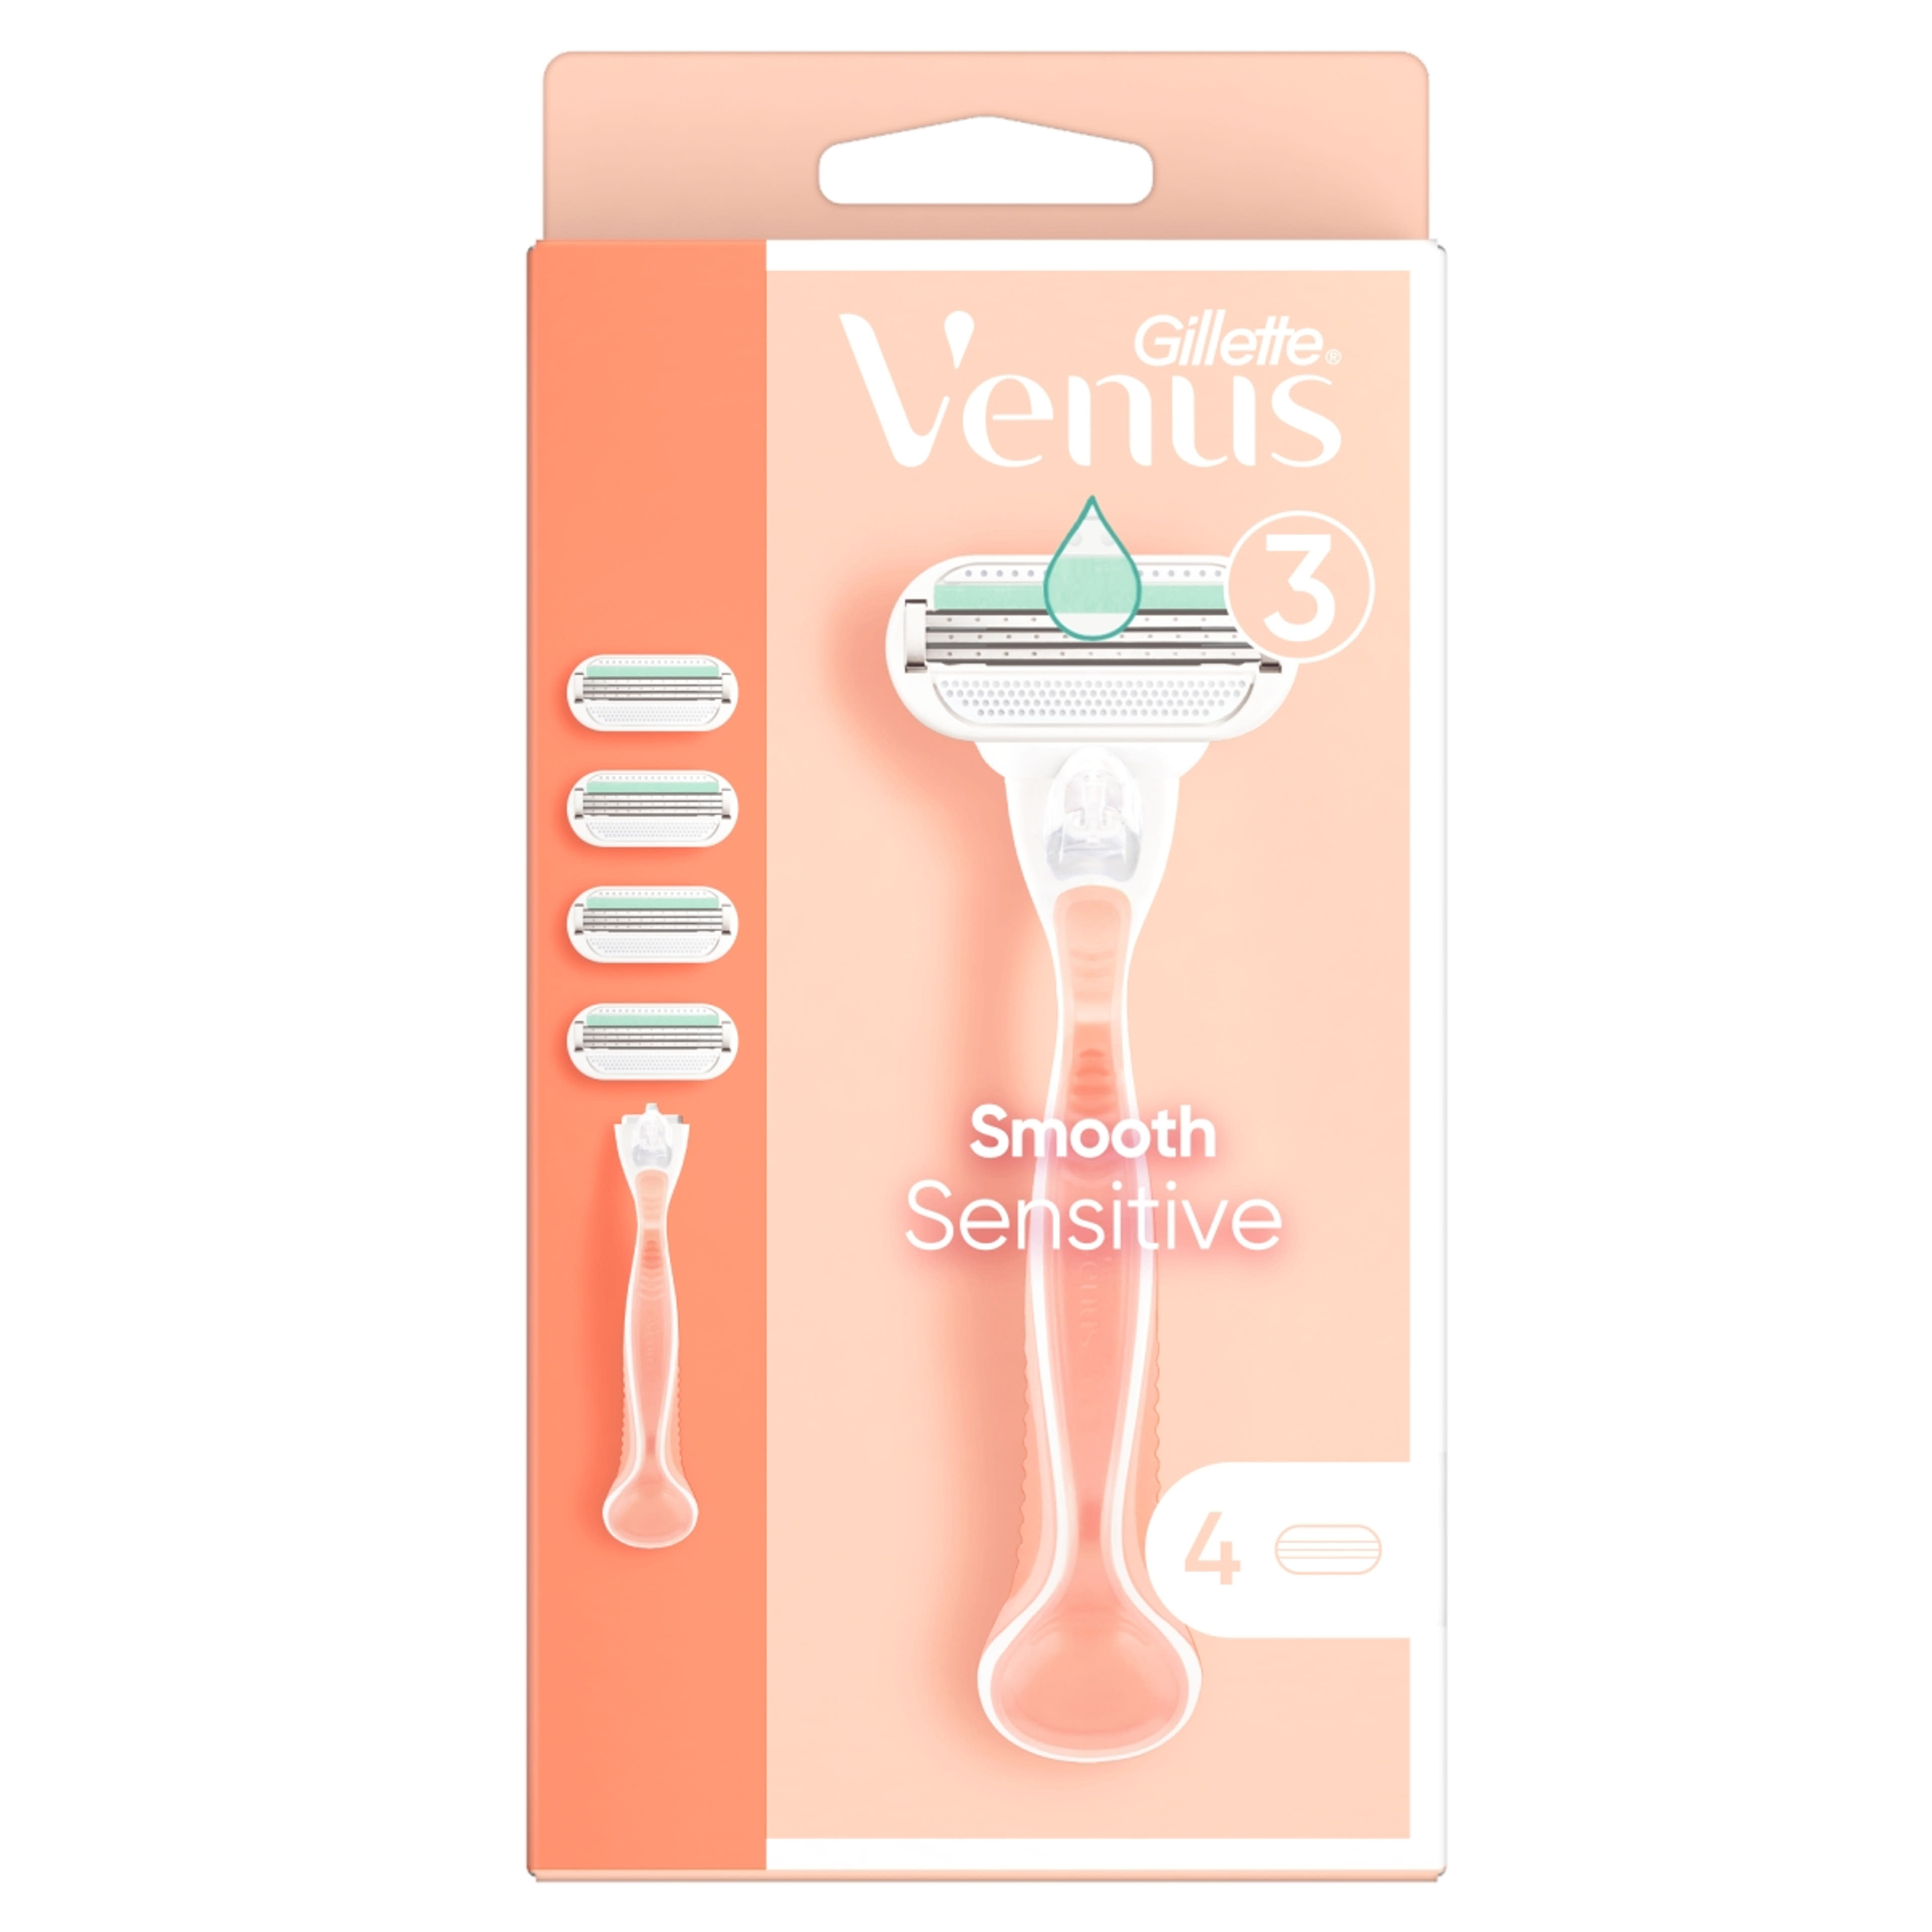 Gillette Venus Smooth Sensitive borotvakészlet 3 pengés + 4 borotvabetét - 1 db